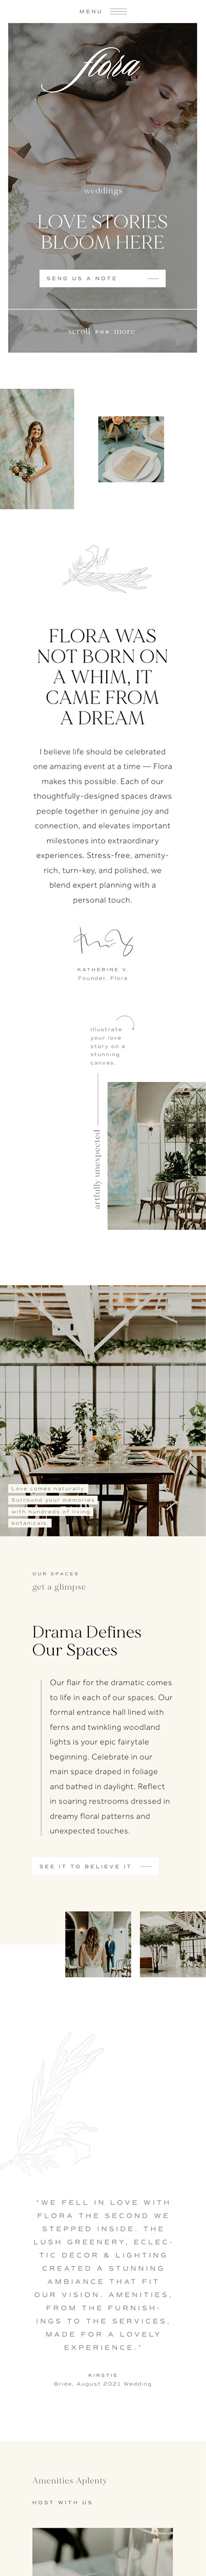 5-k-ritz-design-work-flora-the-venue-website-project-mobile-interior-1-left-resize